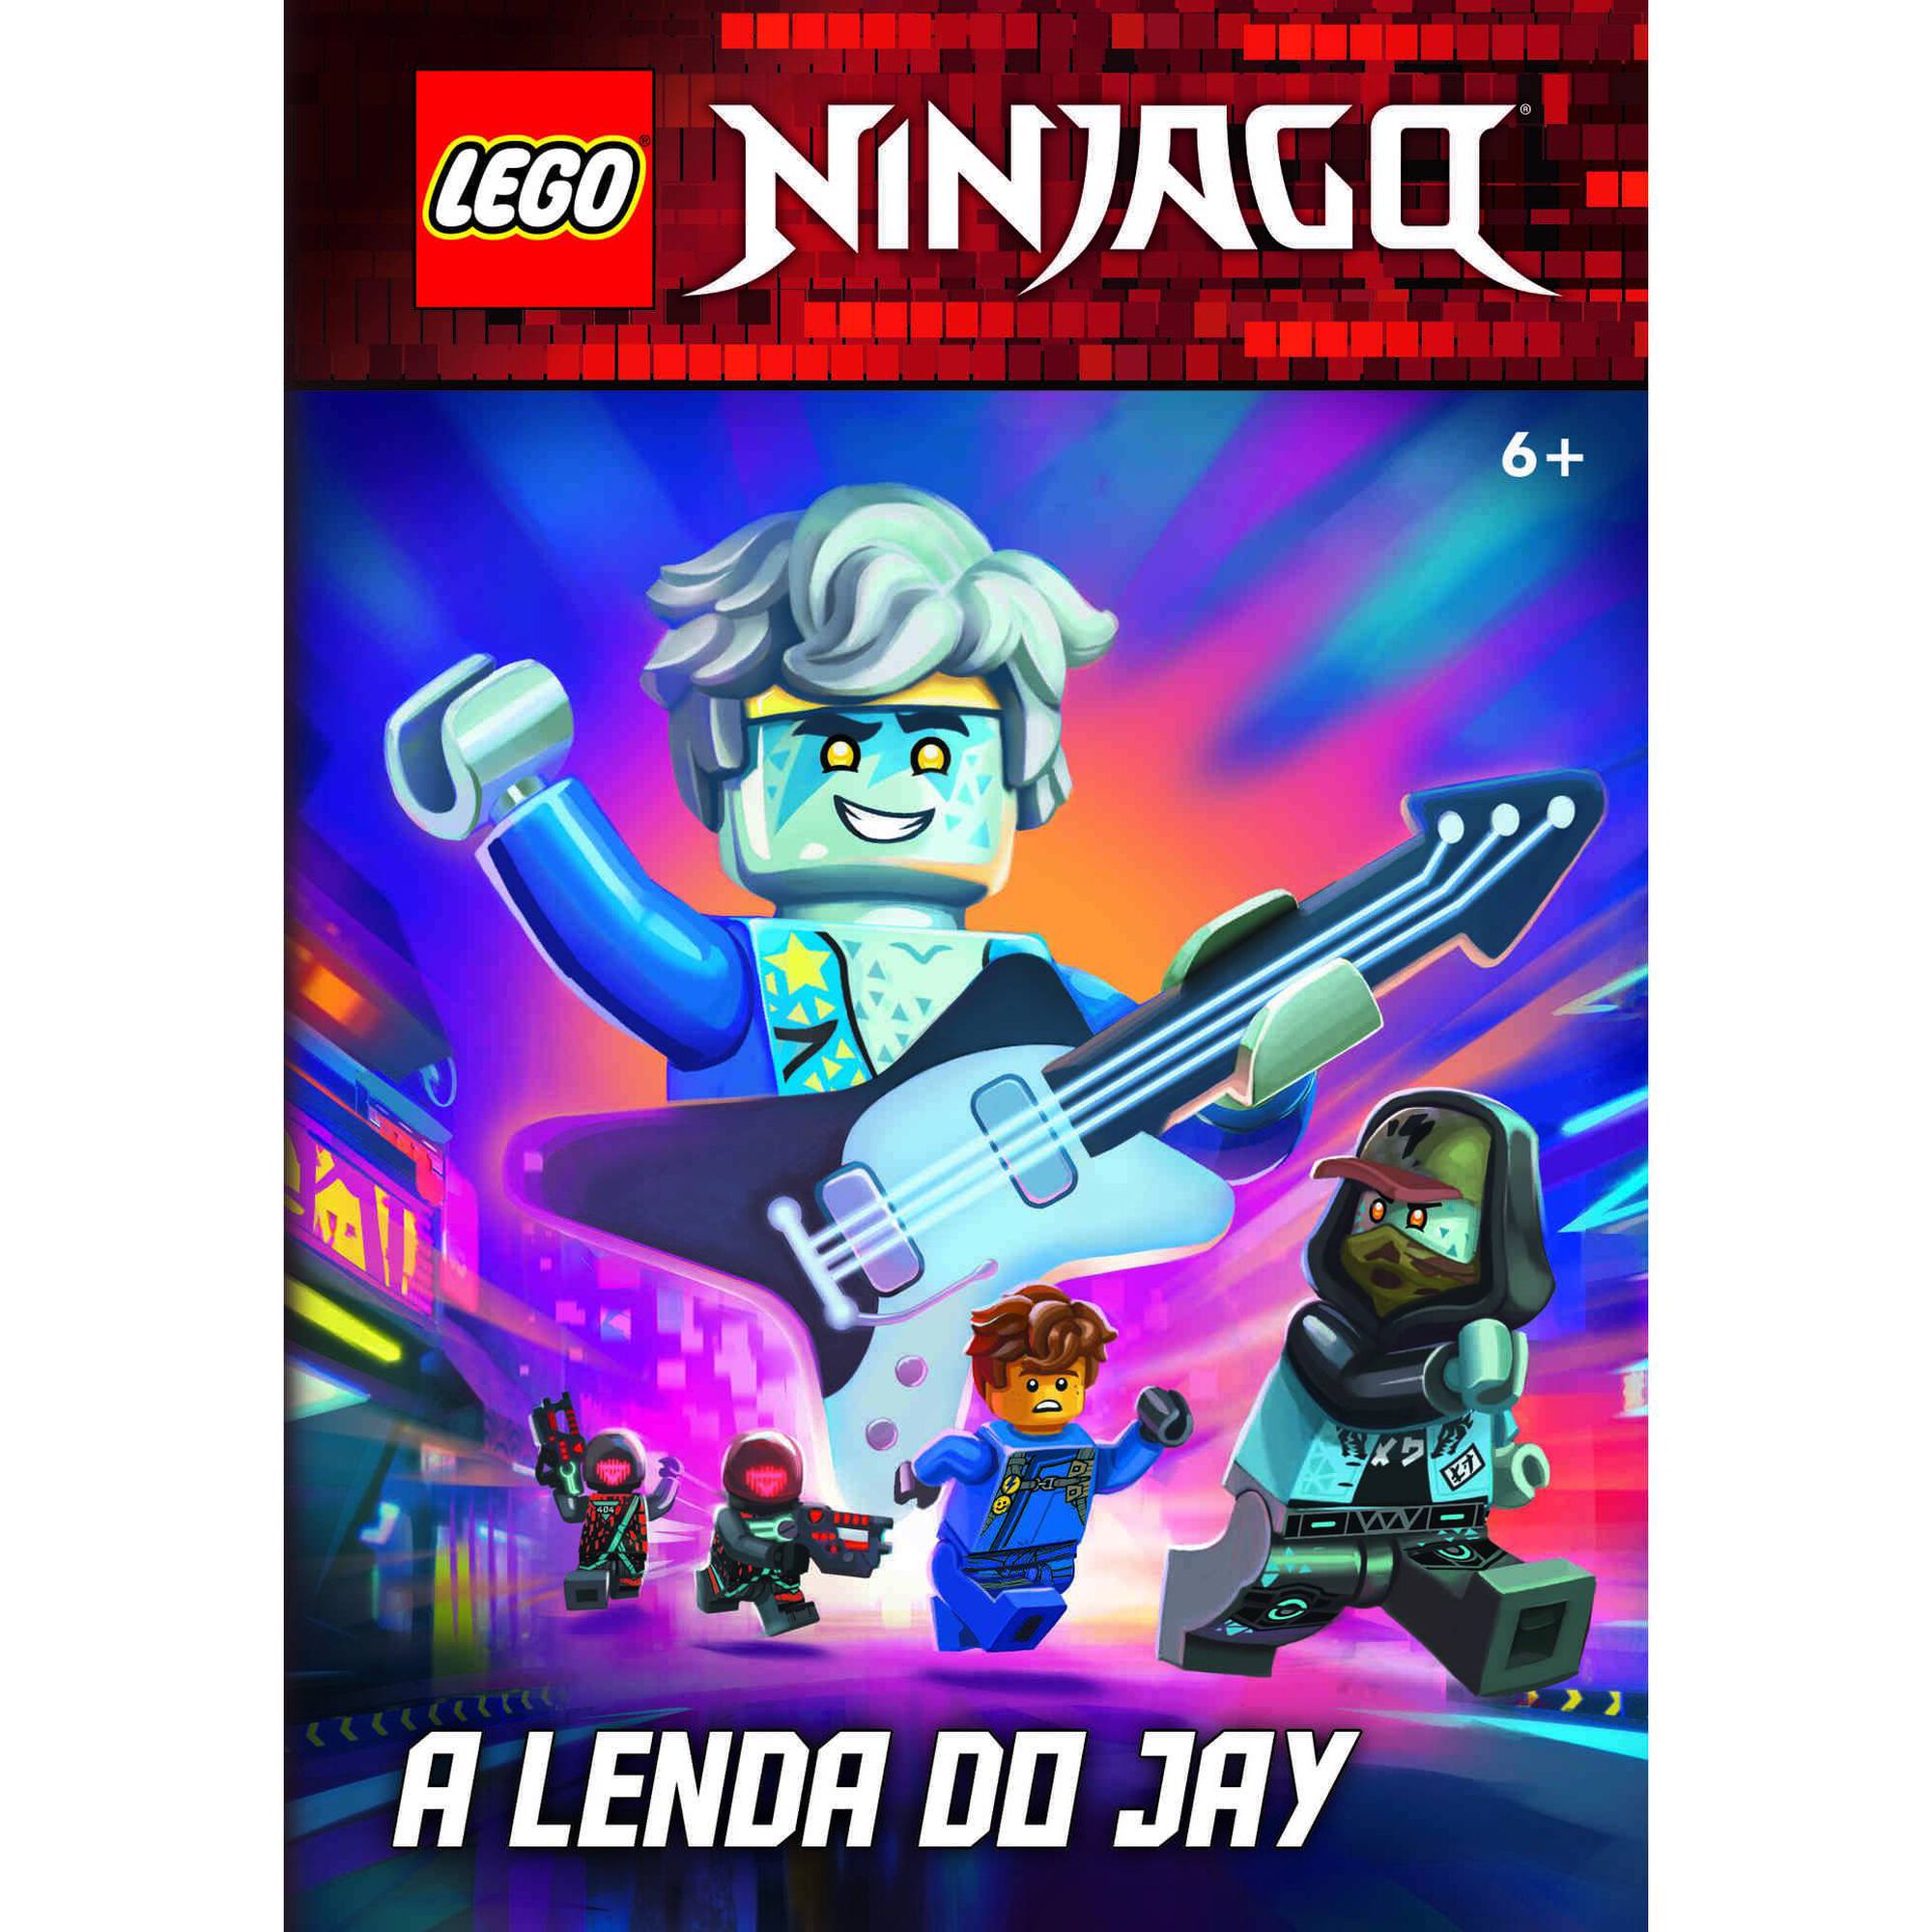 LEGO Ninjago - A Lenda do Jay